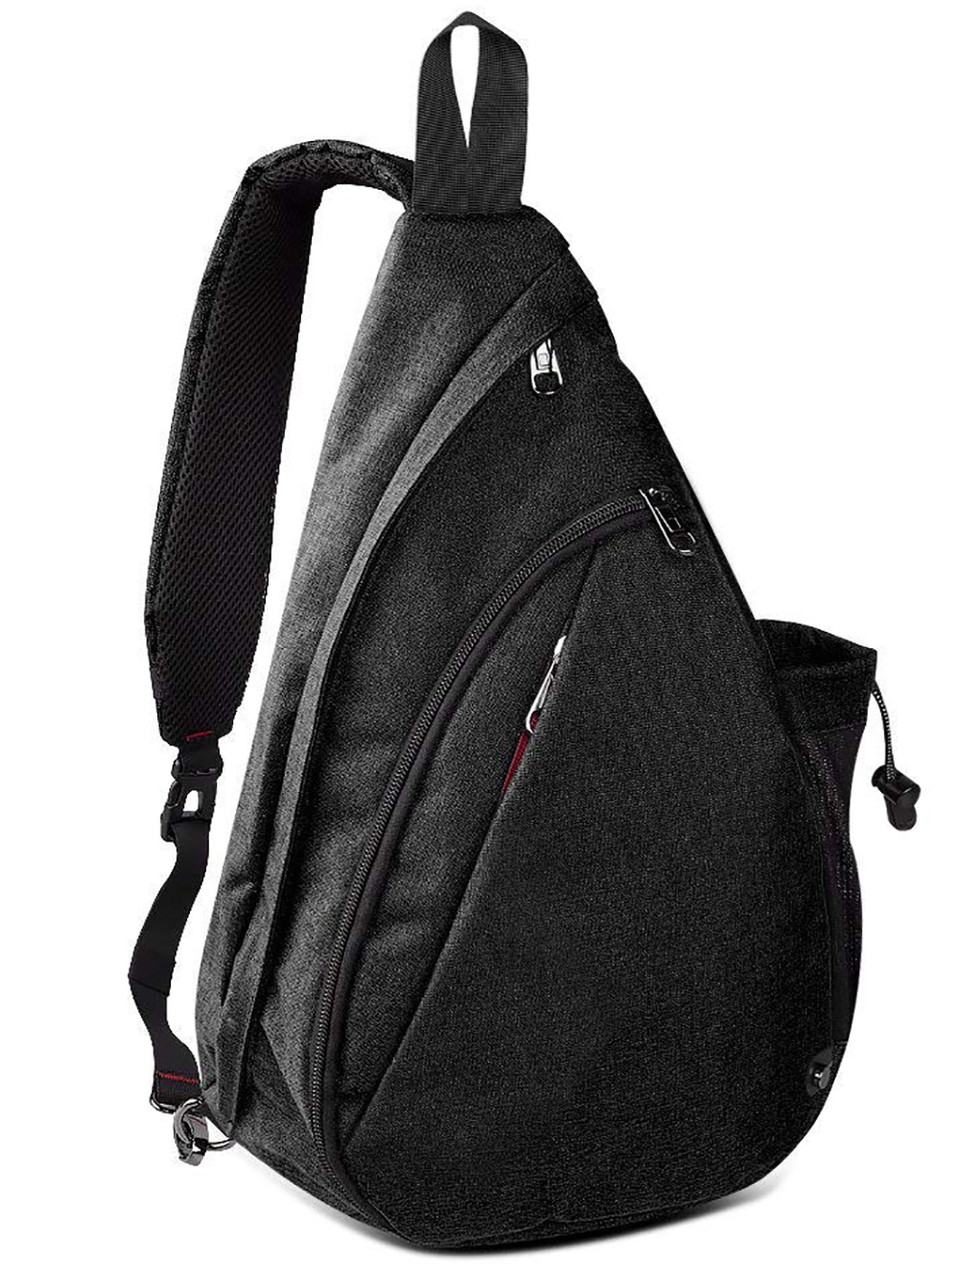 OutdoorMaster Sling Bag - Single Strap Crossbody Backpack for Women ...